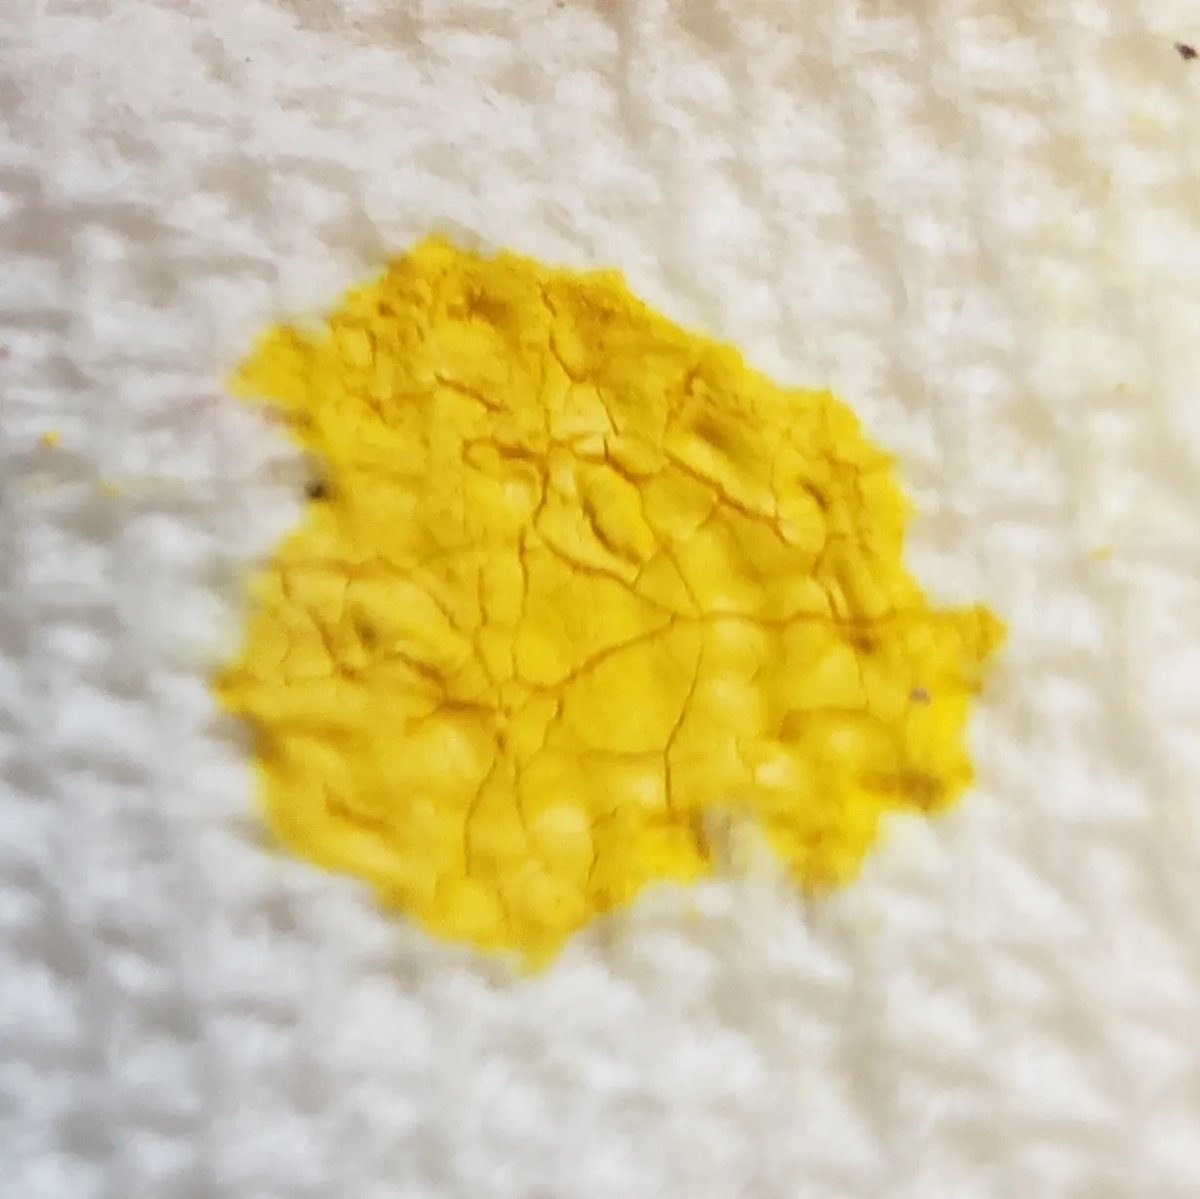 Canary Yellow Powder Pigment 